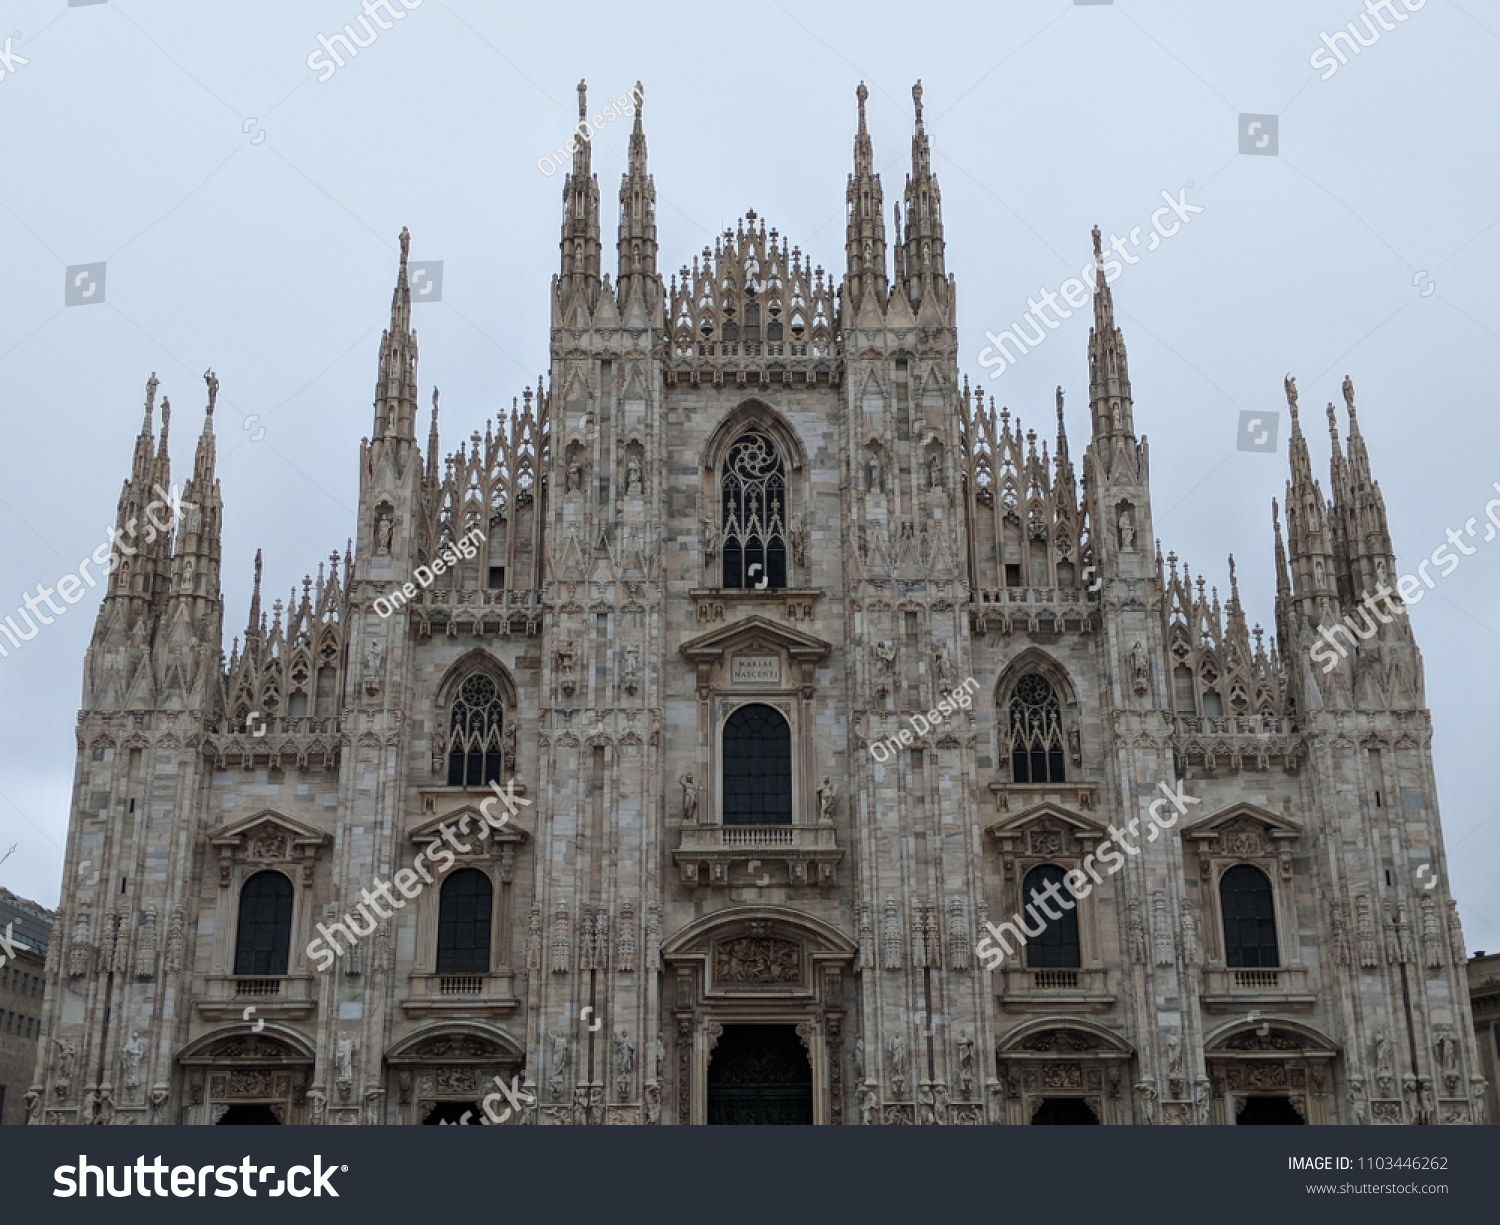 Doumo di Milano, the Cathedral Church of Milan, Lombardo Italy. Europe. Popular tourist attraction. #1103446262